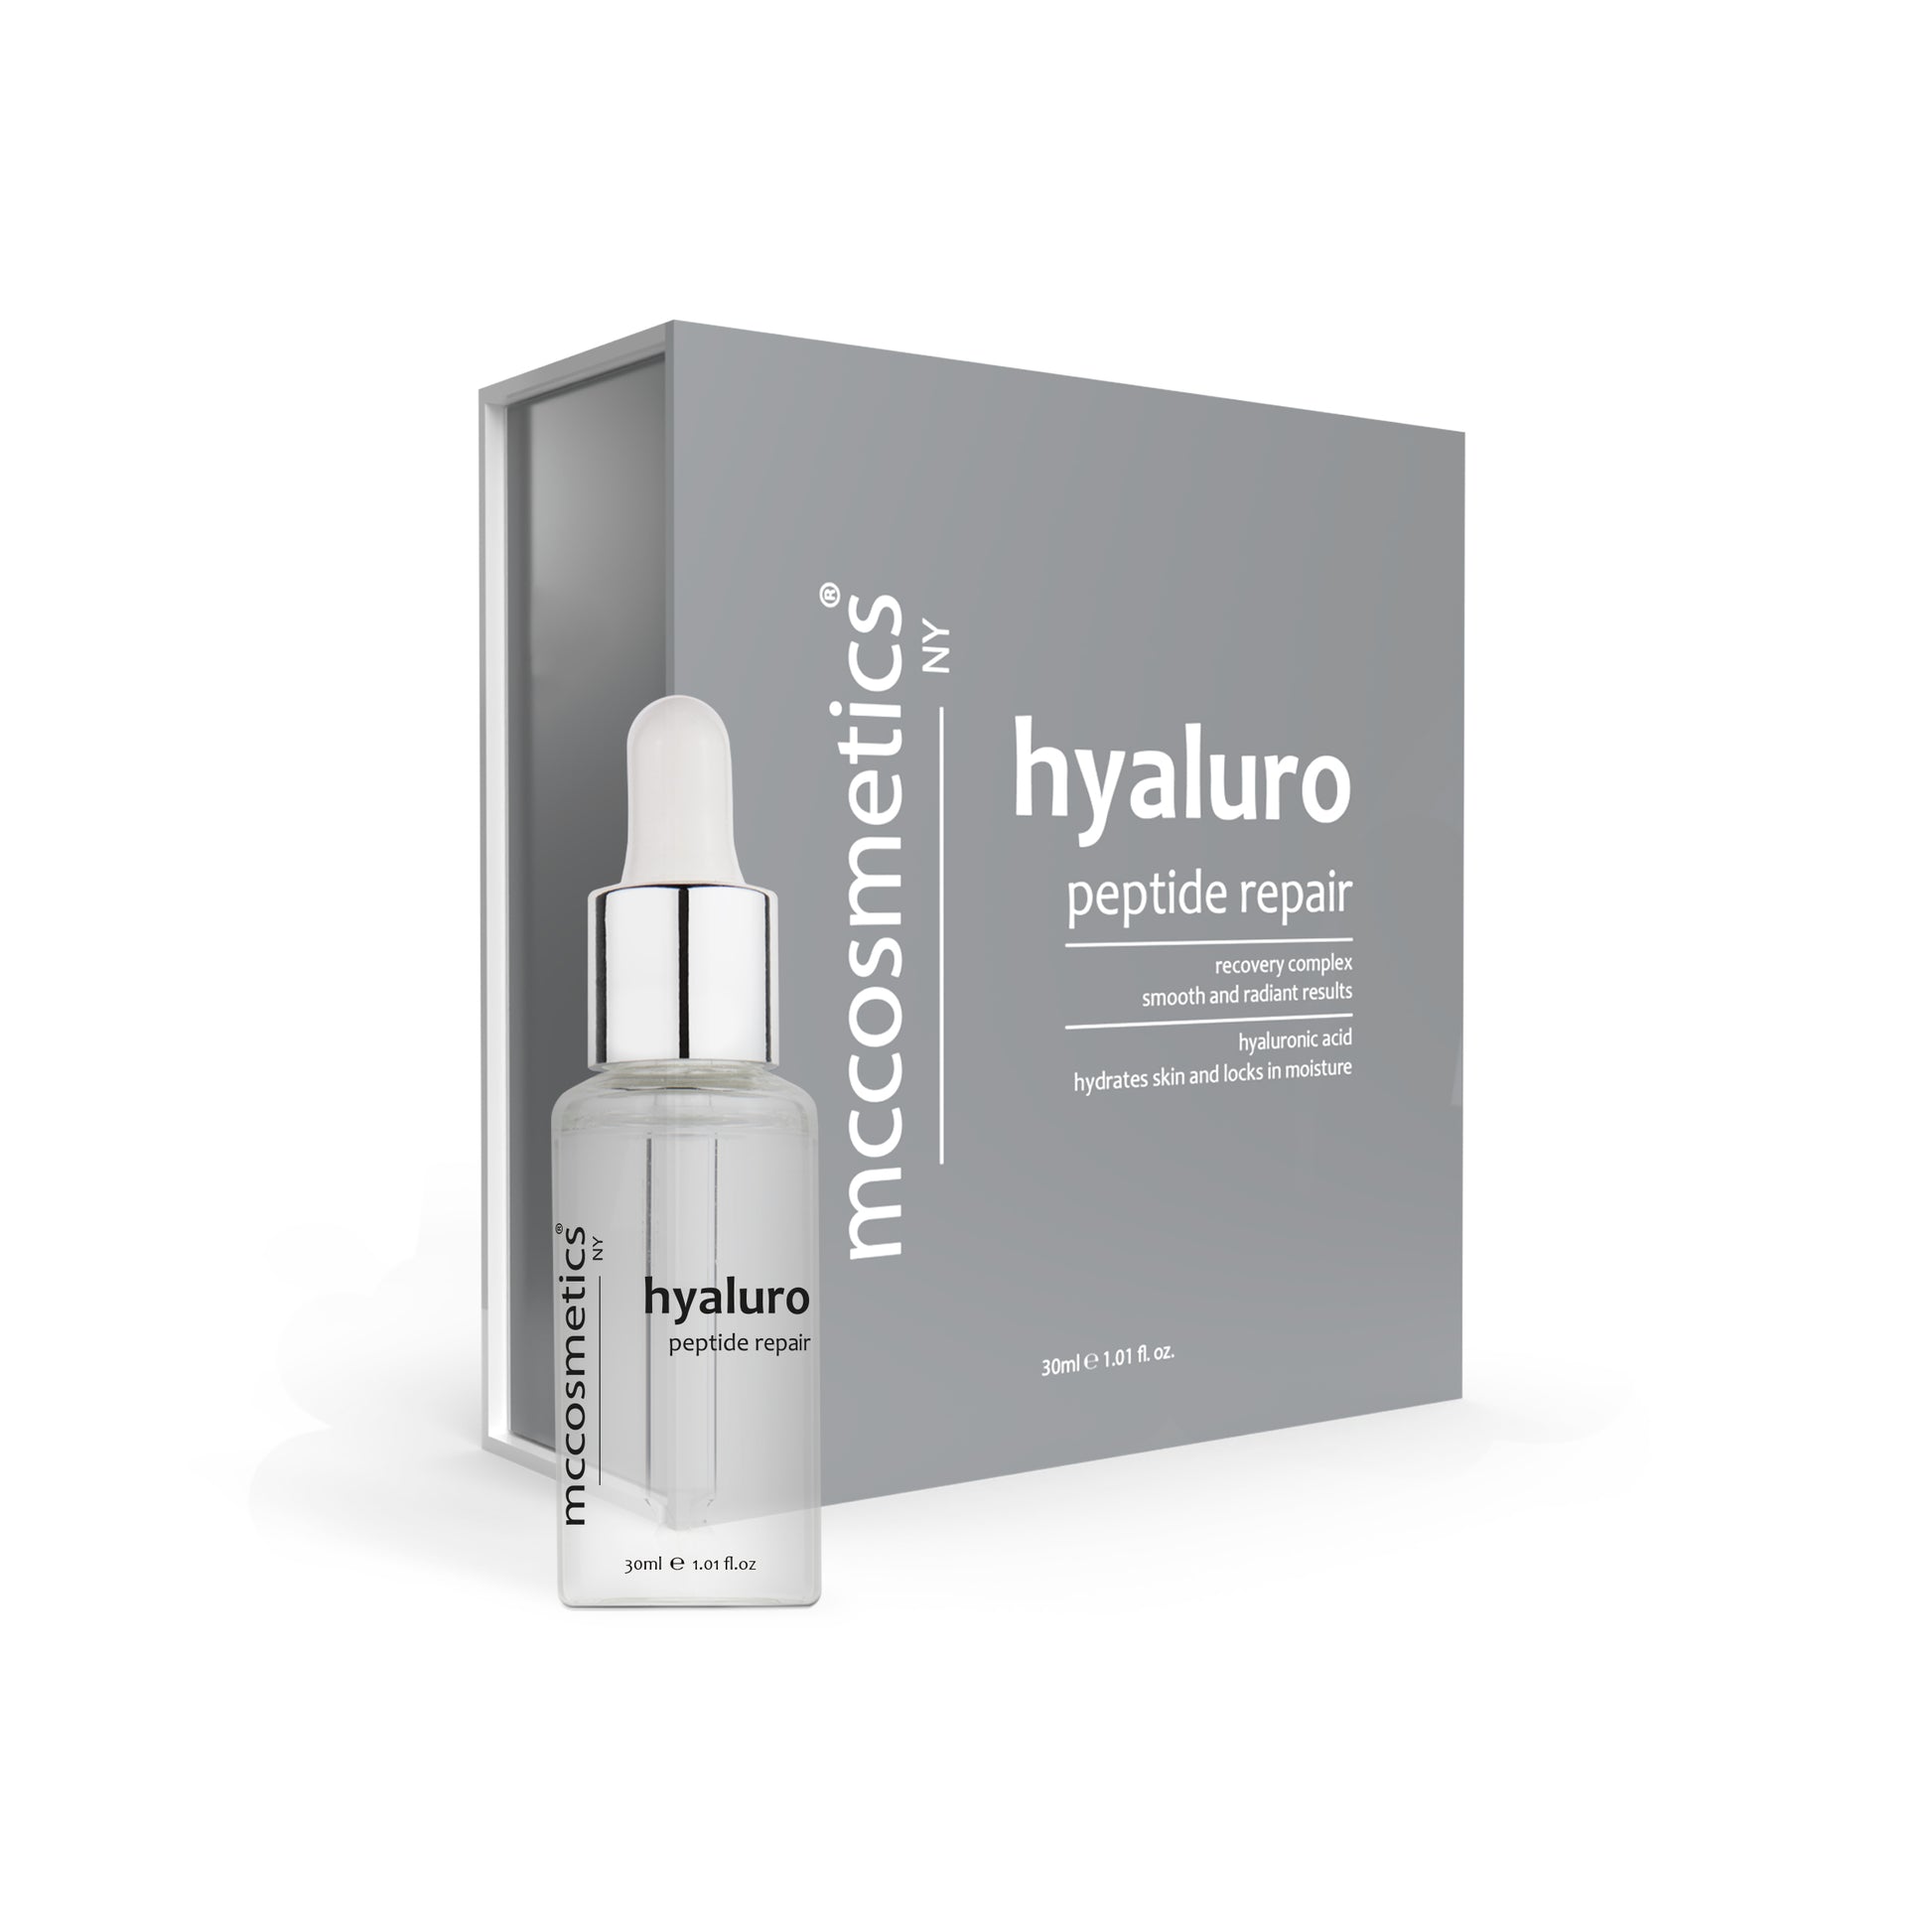 hyaluro peptide repair - mccosmetics.ny